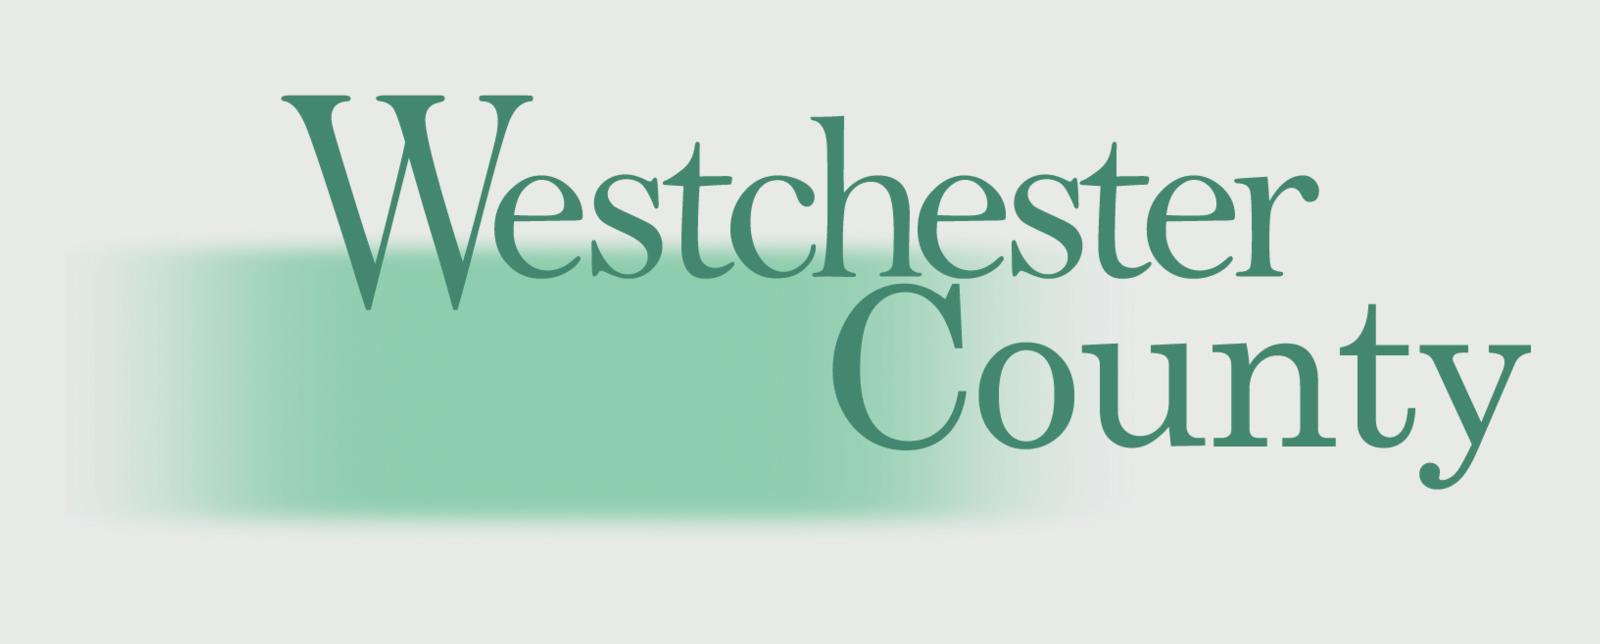 Westchester County logo